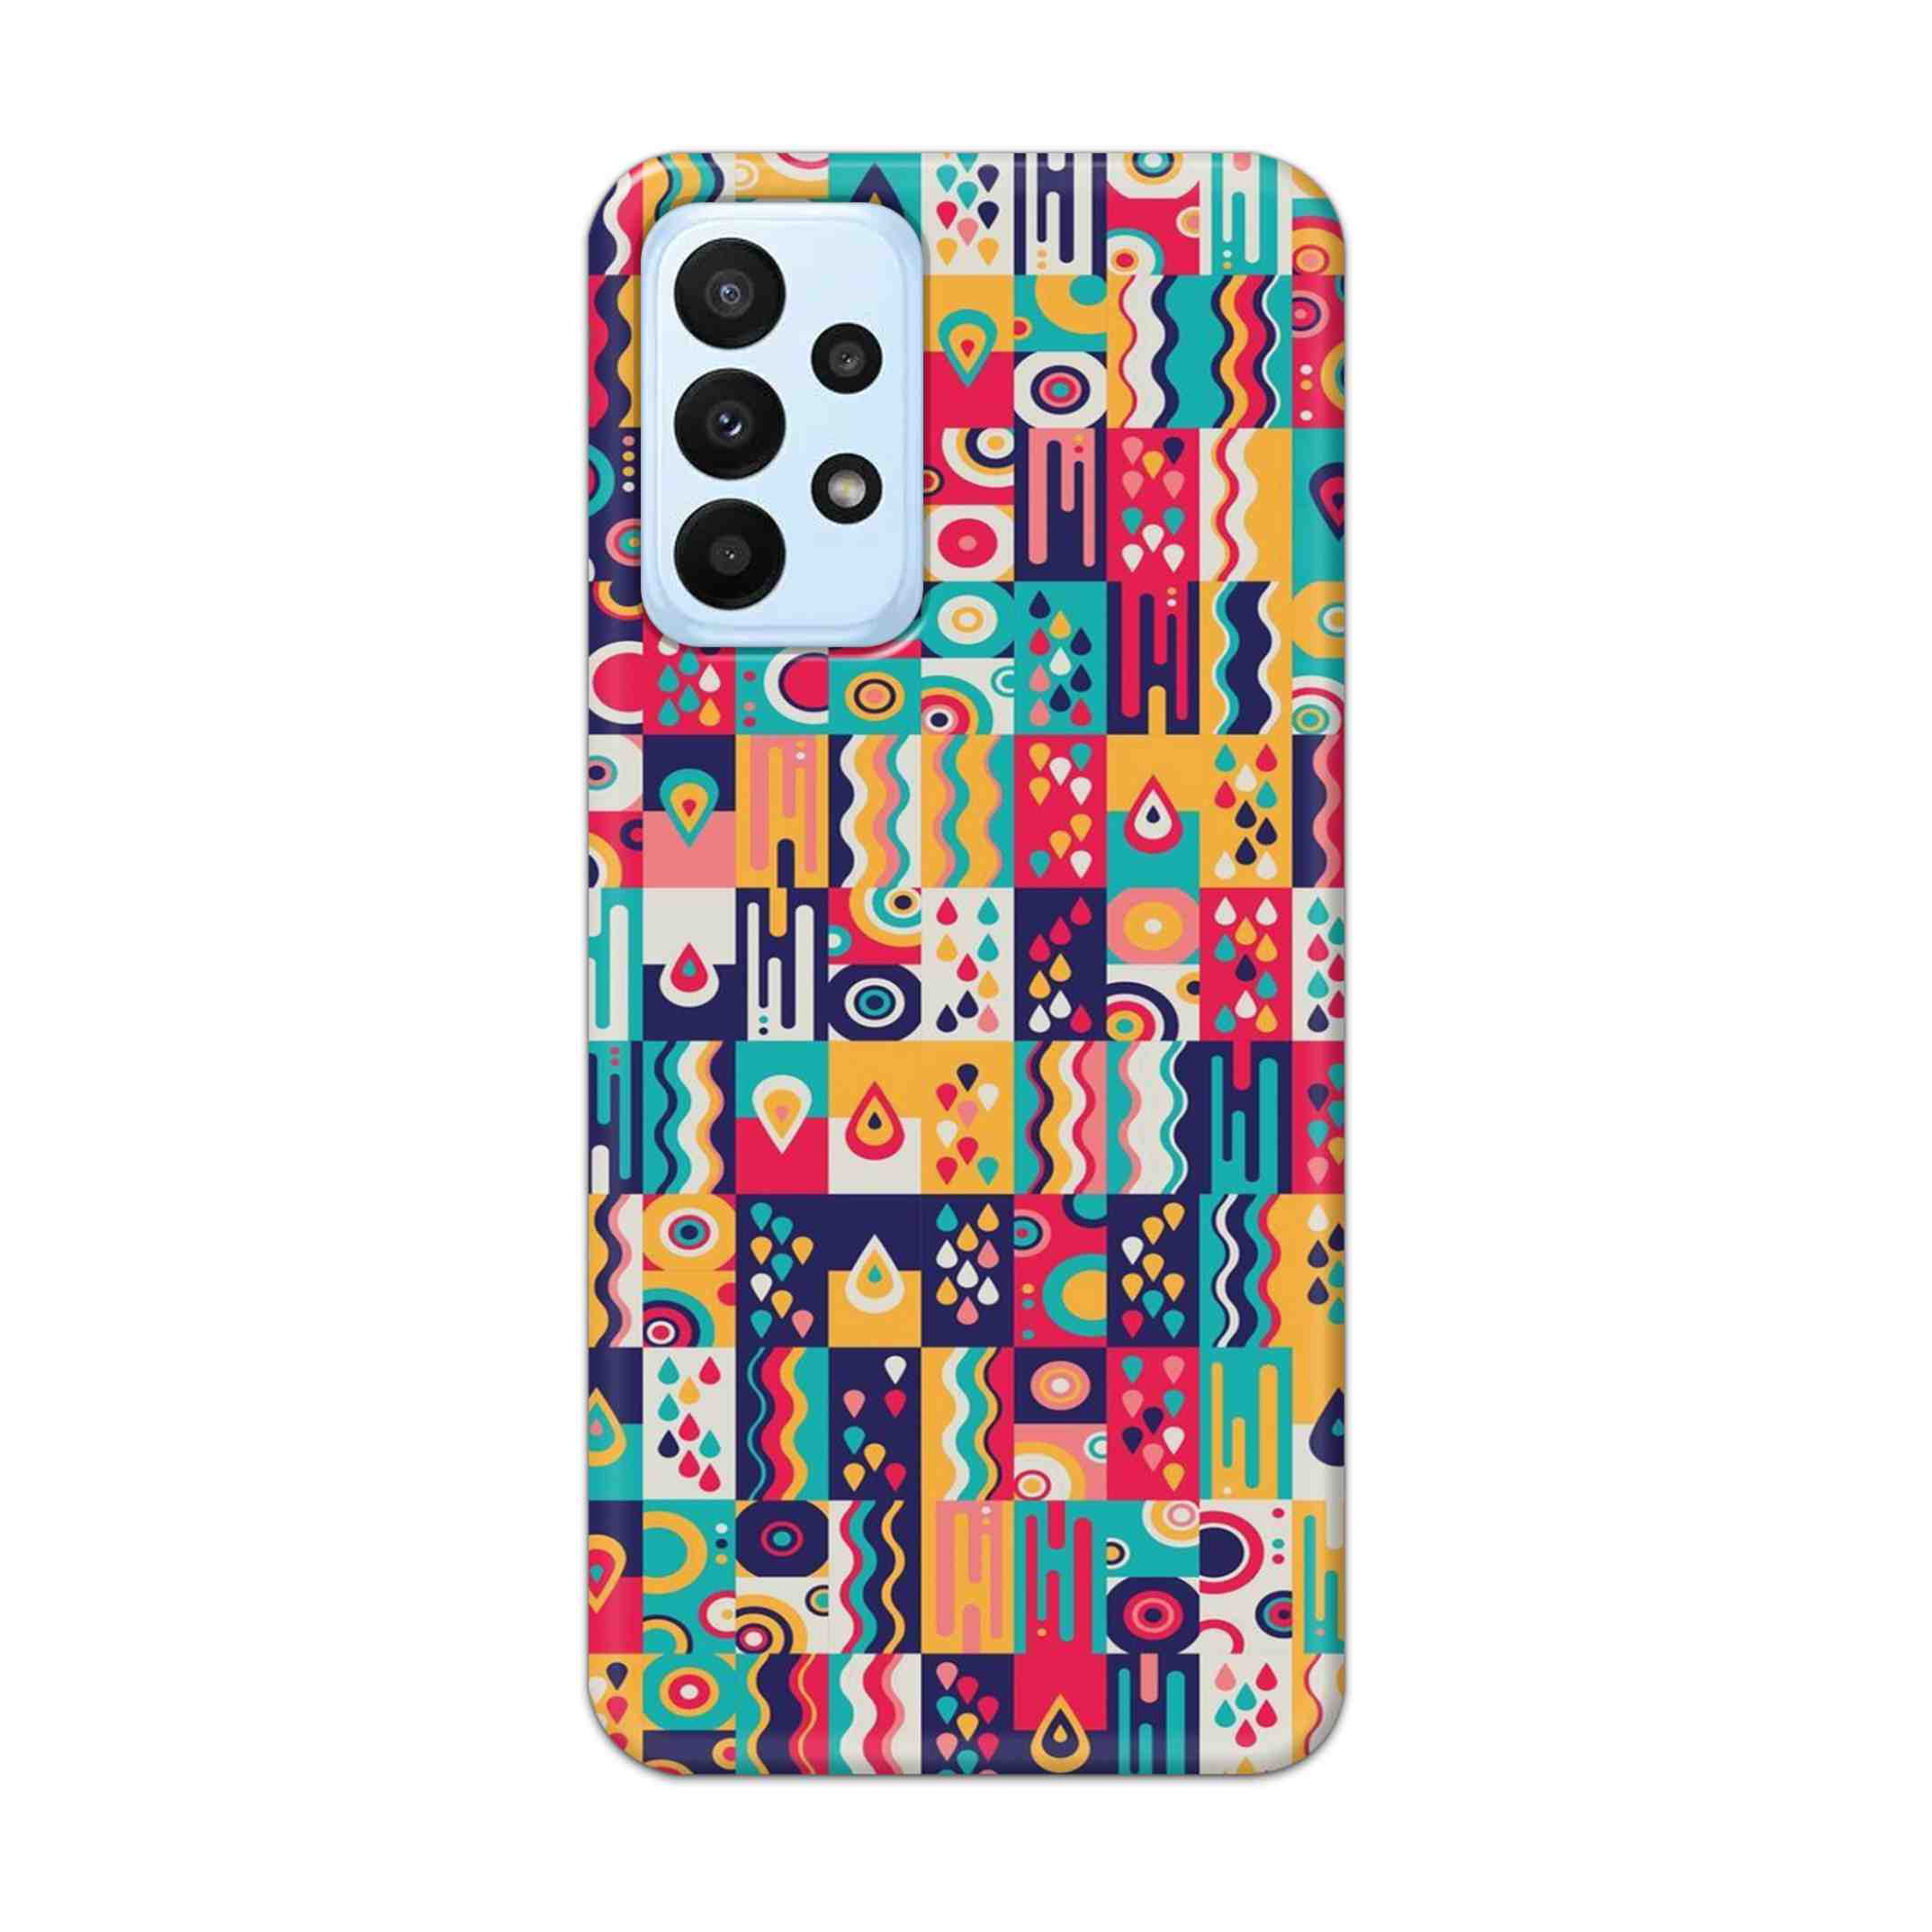 Buy Art Hard Back Mobile Phone Case Cover For Samsung A23 Online